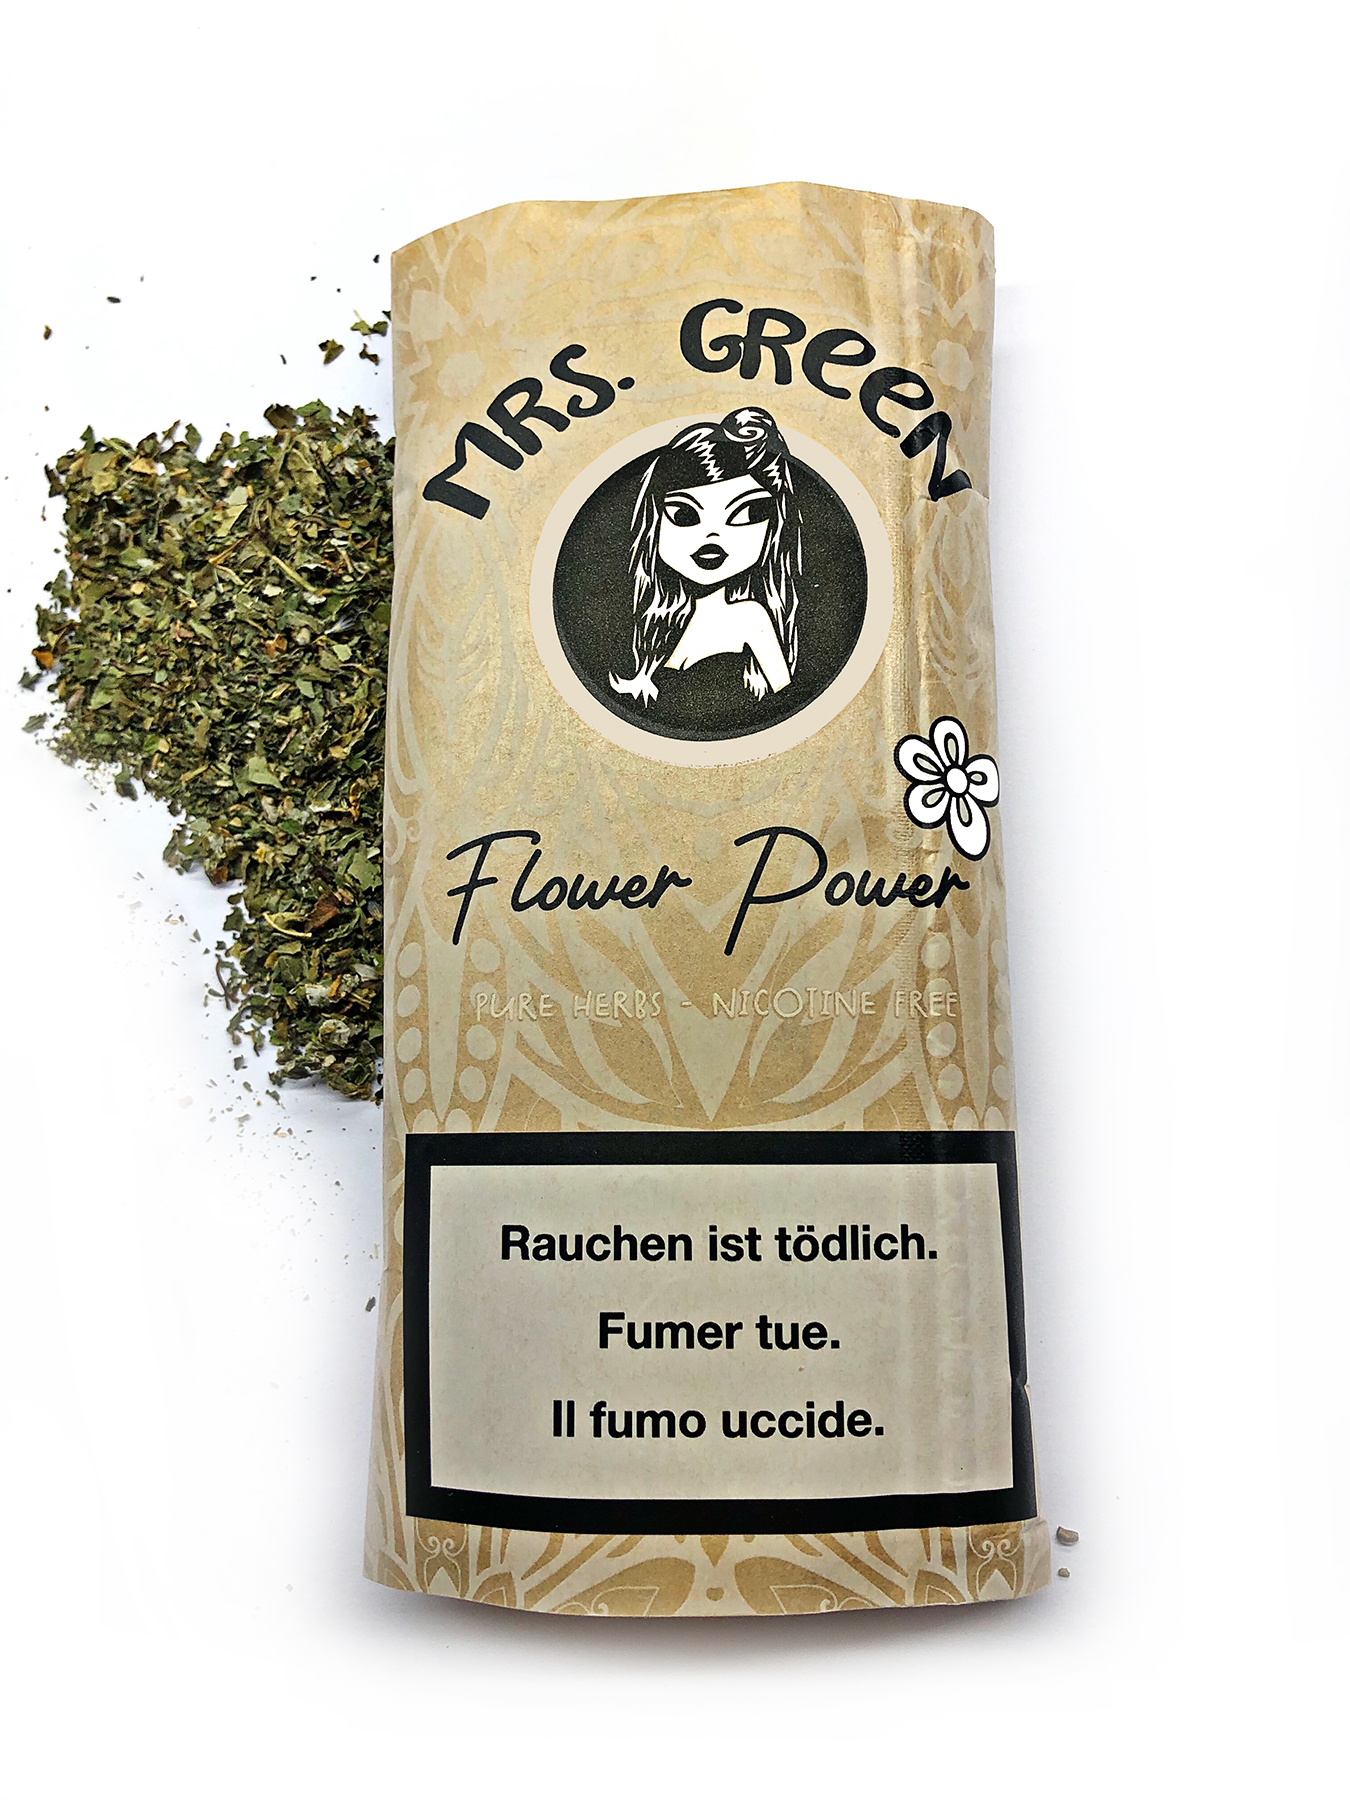 Frau Grün - Flower Power herbal mixture 80g (100% nicotine-free and natural)